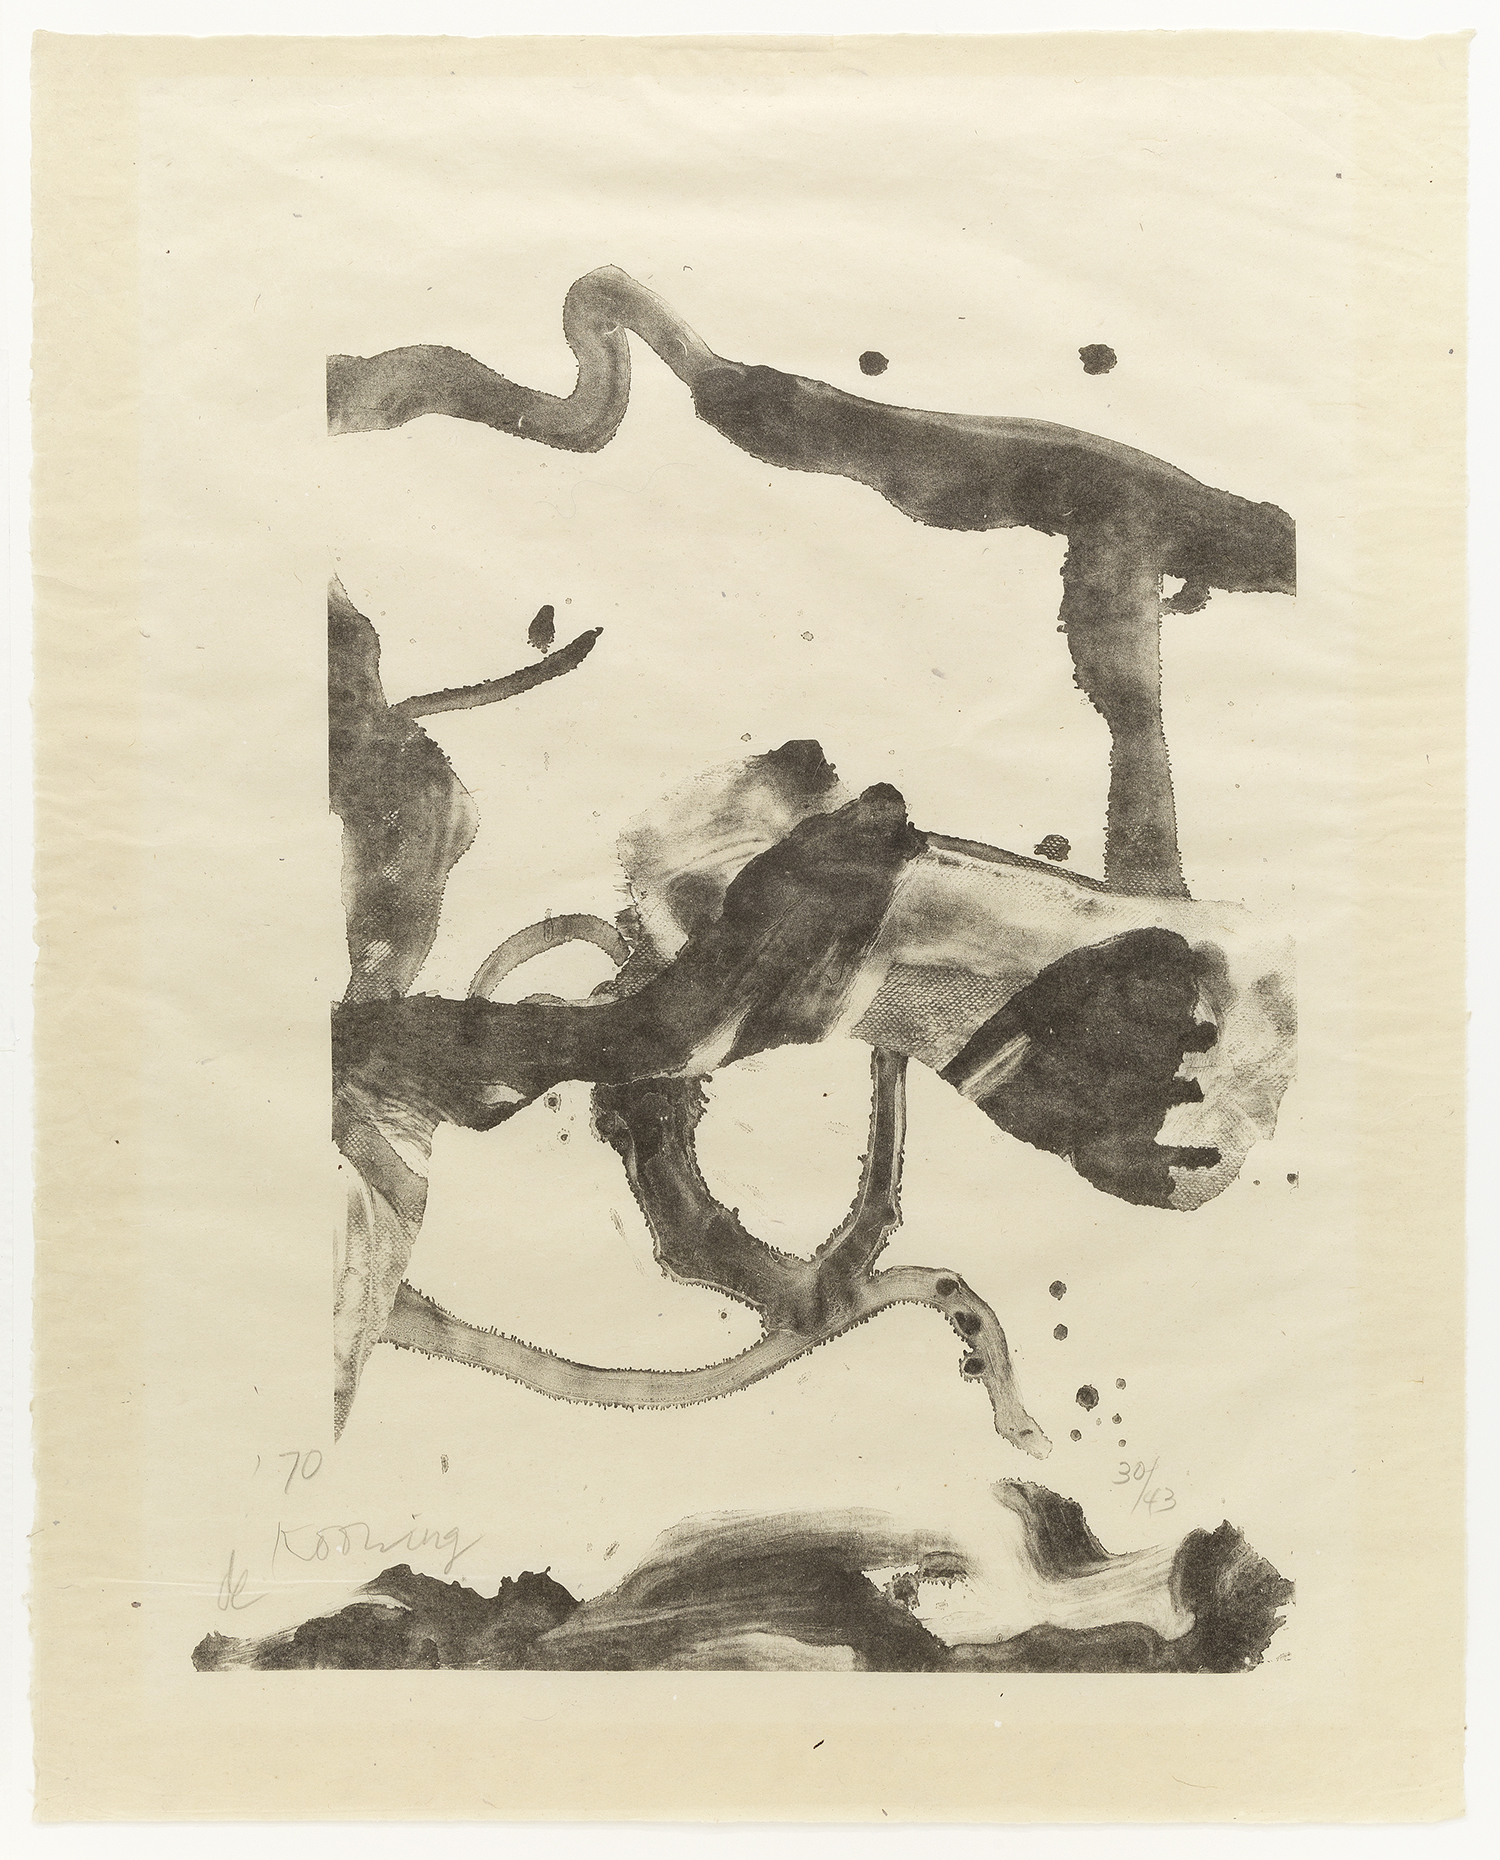 Souvenir of Montauk, 1970, Lithograph, 34 x 27 1/4 inches (86.4 x 69.2 cm), Edition of 43